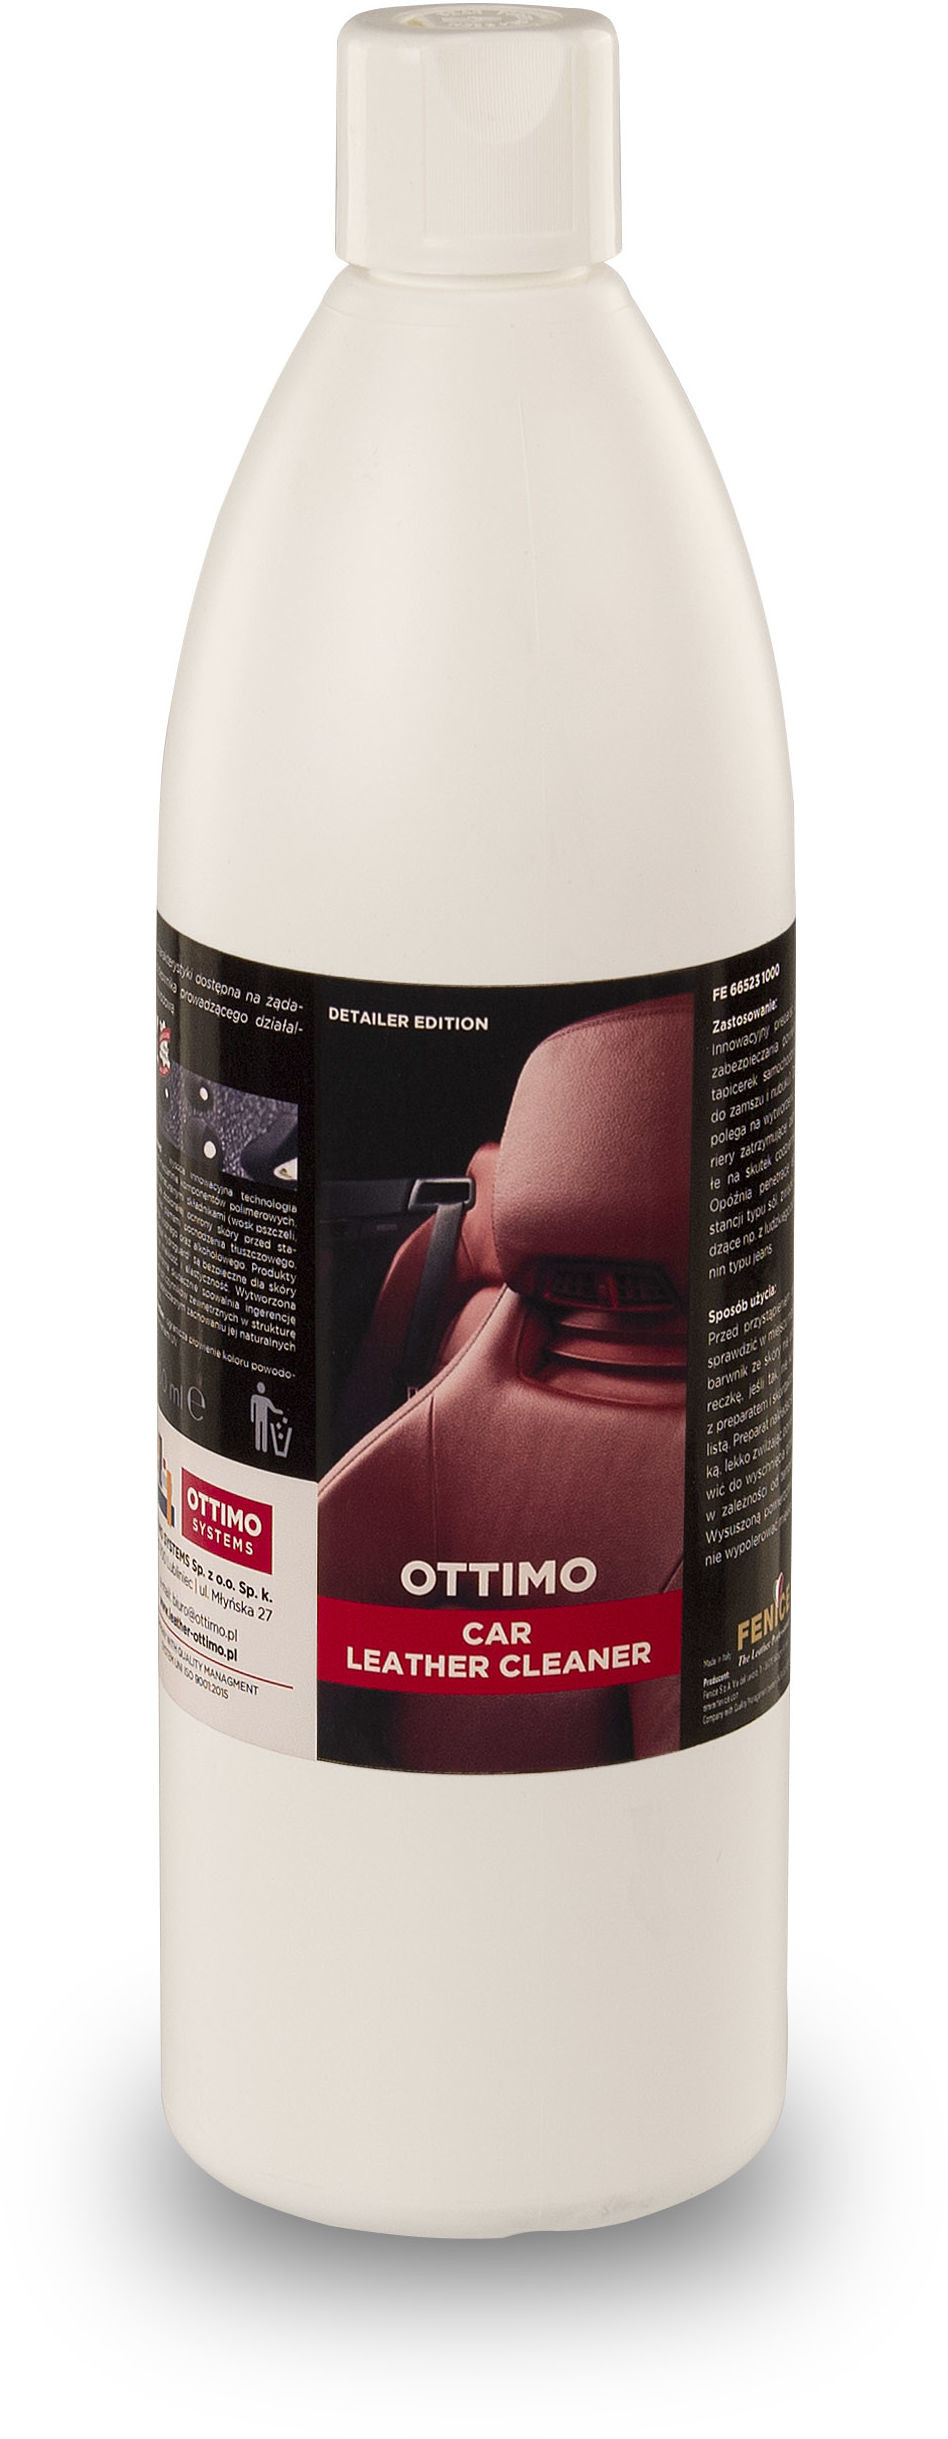 Ottimo systems Ottimo Leather Cleaner  produkt do czyszczenia skóry  1l Ott000005